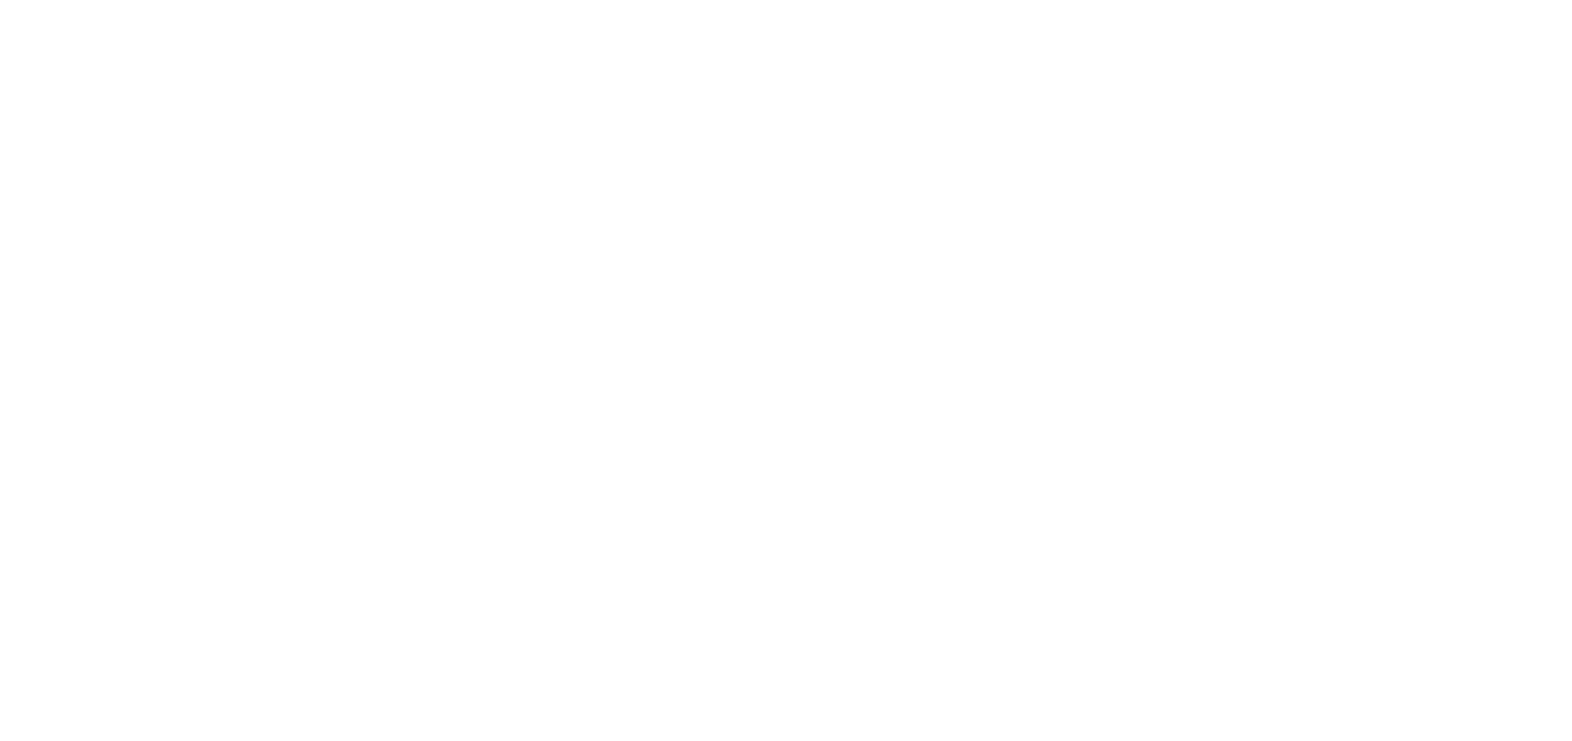 Xunlei logo large for dark backgrounds (transparent PNG)